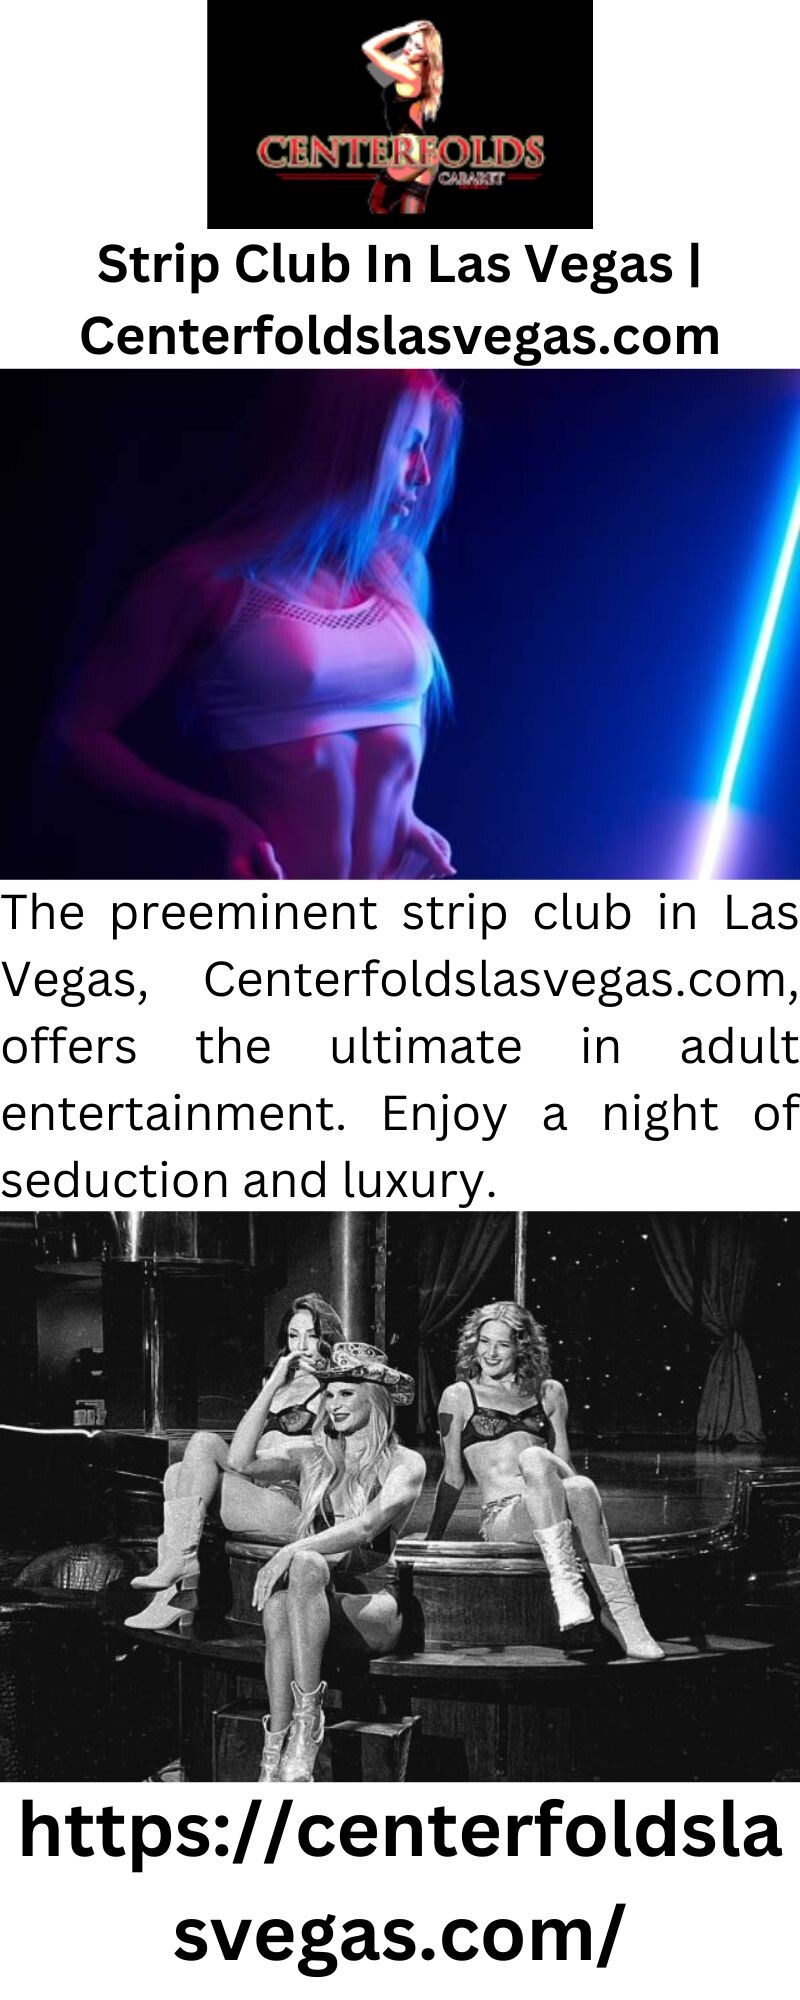 Strip-Club-In-Las-Vegas-Centerfoldslasvegas.com5d473c4d2c9cd9b5.jpg